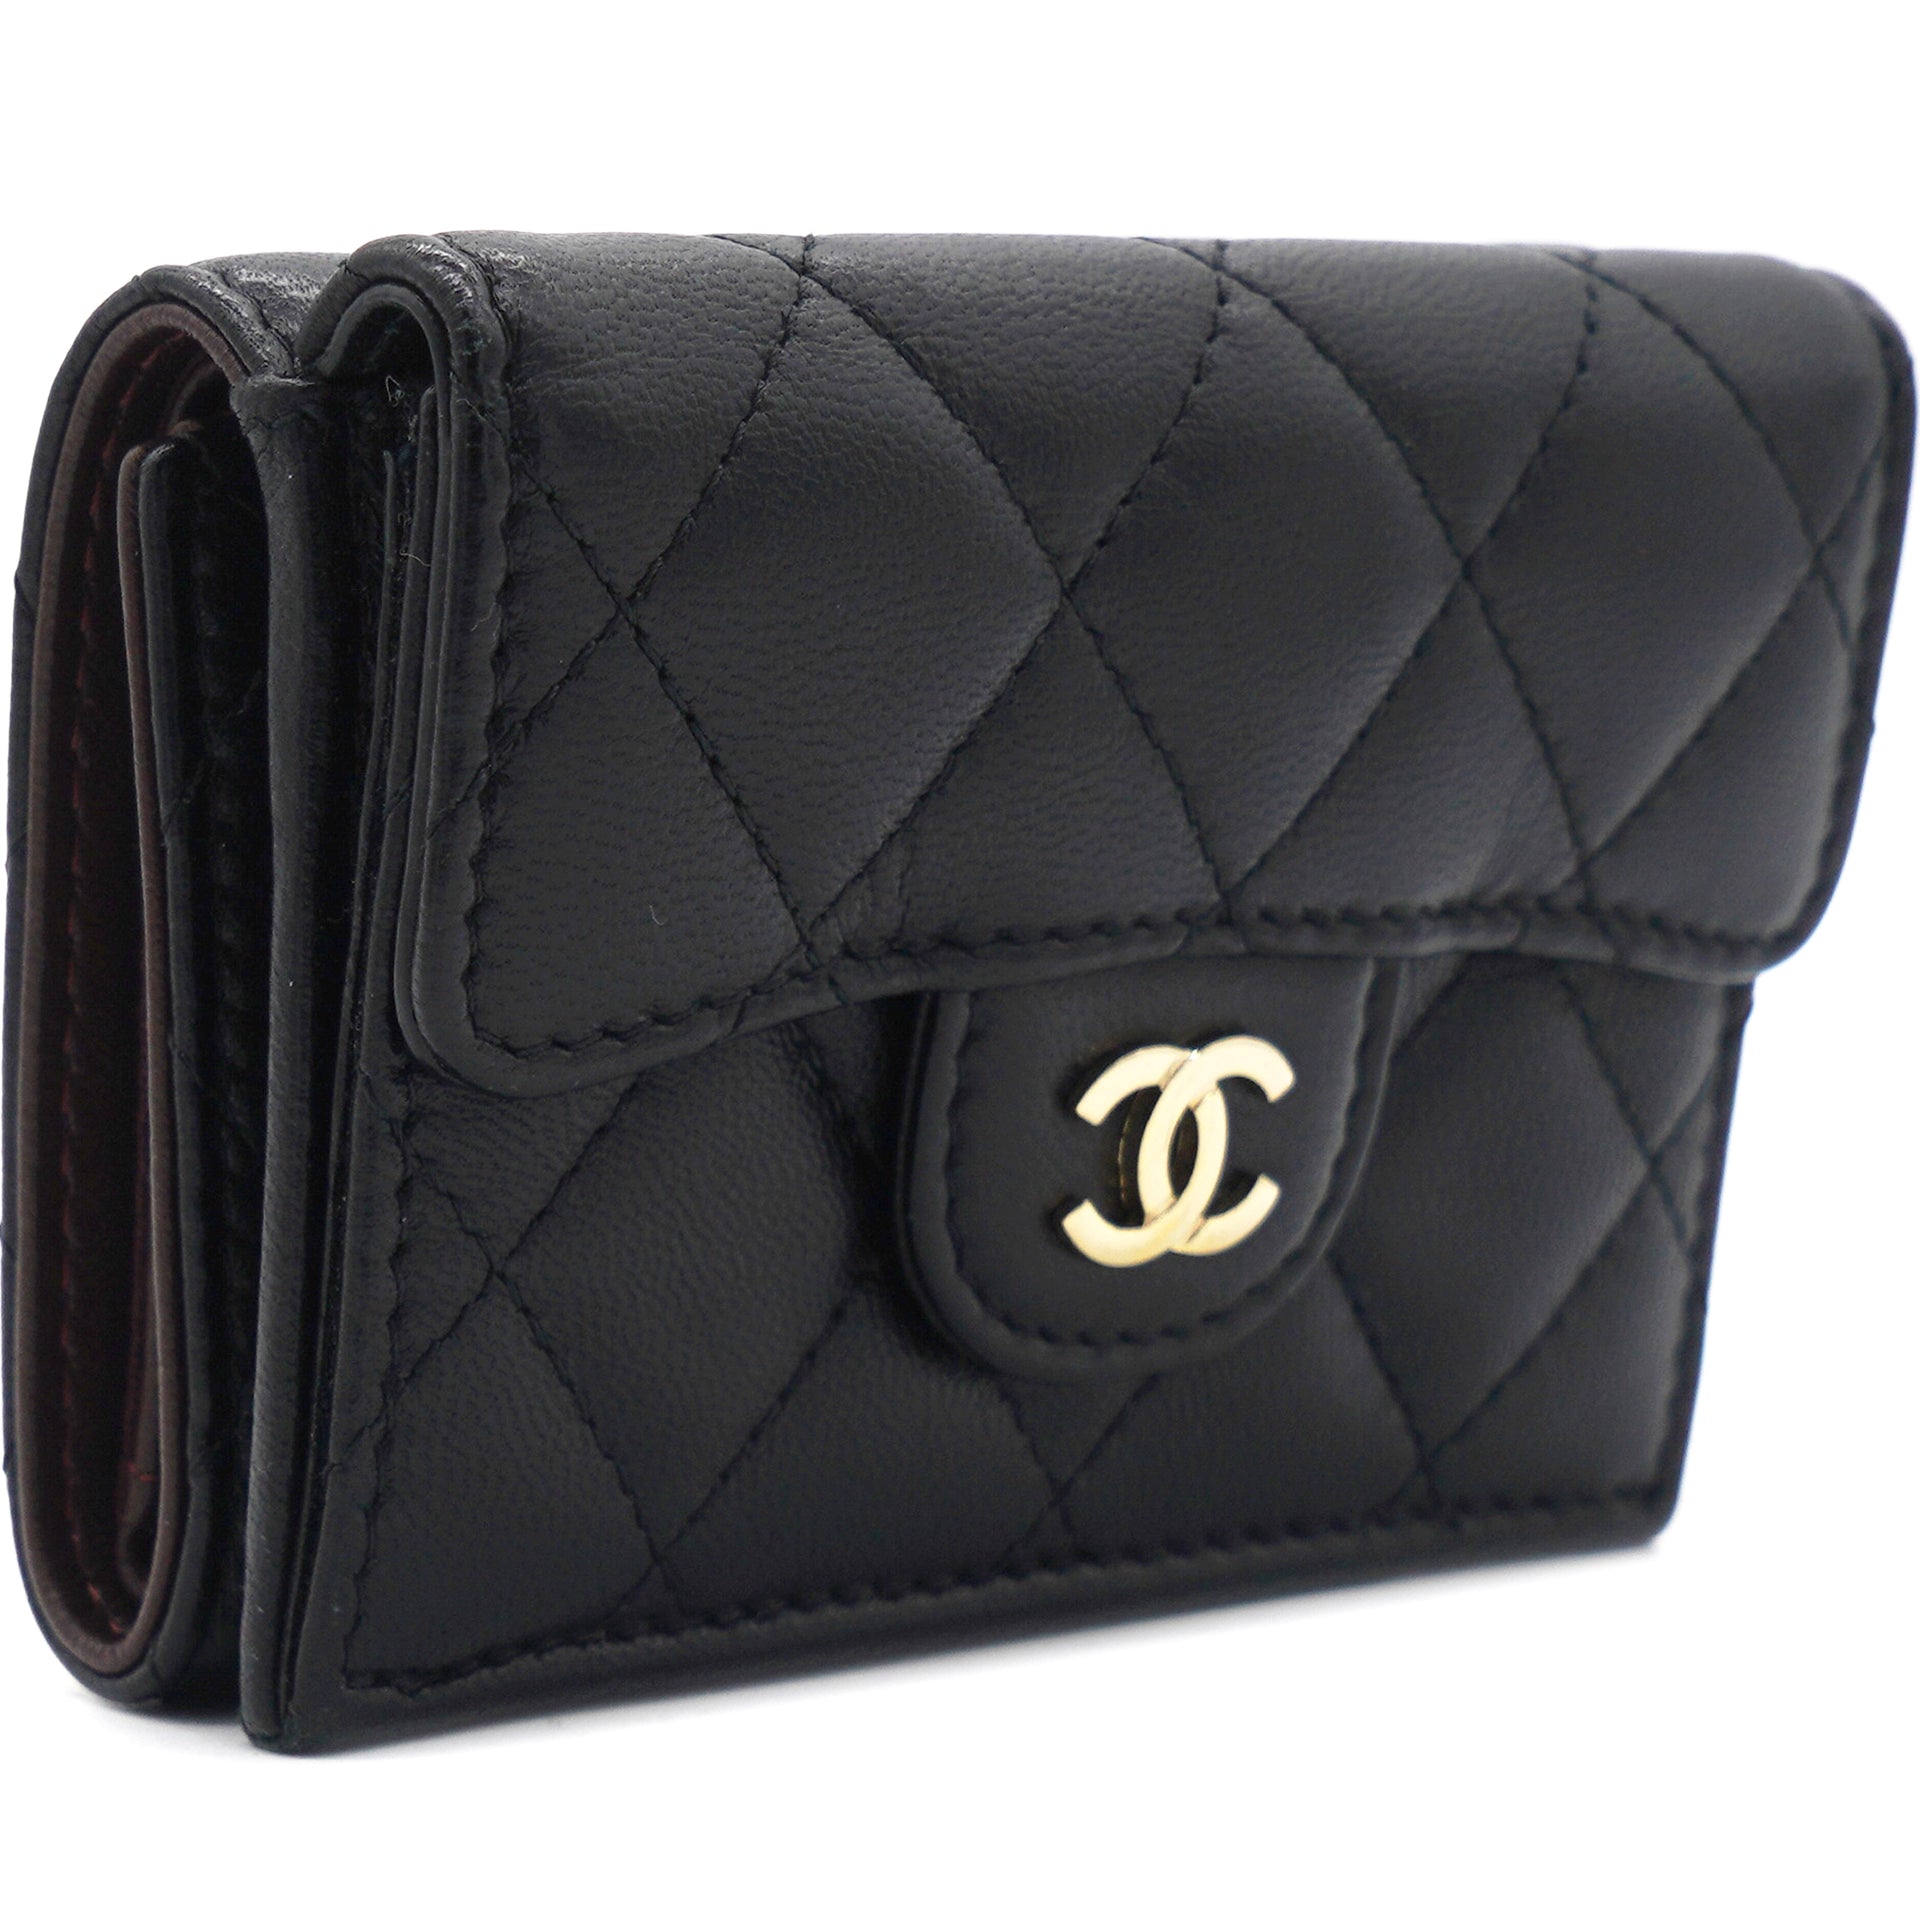 Chanel quited lambskin bifold card holder black